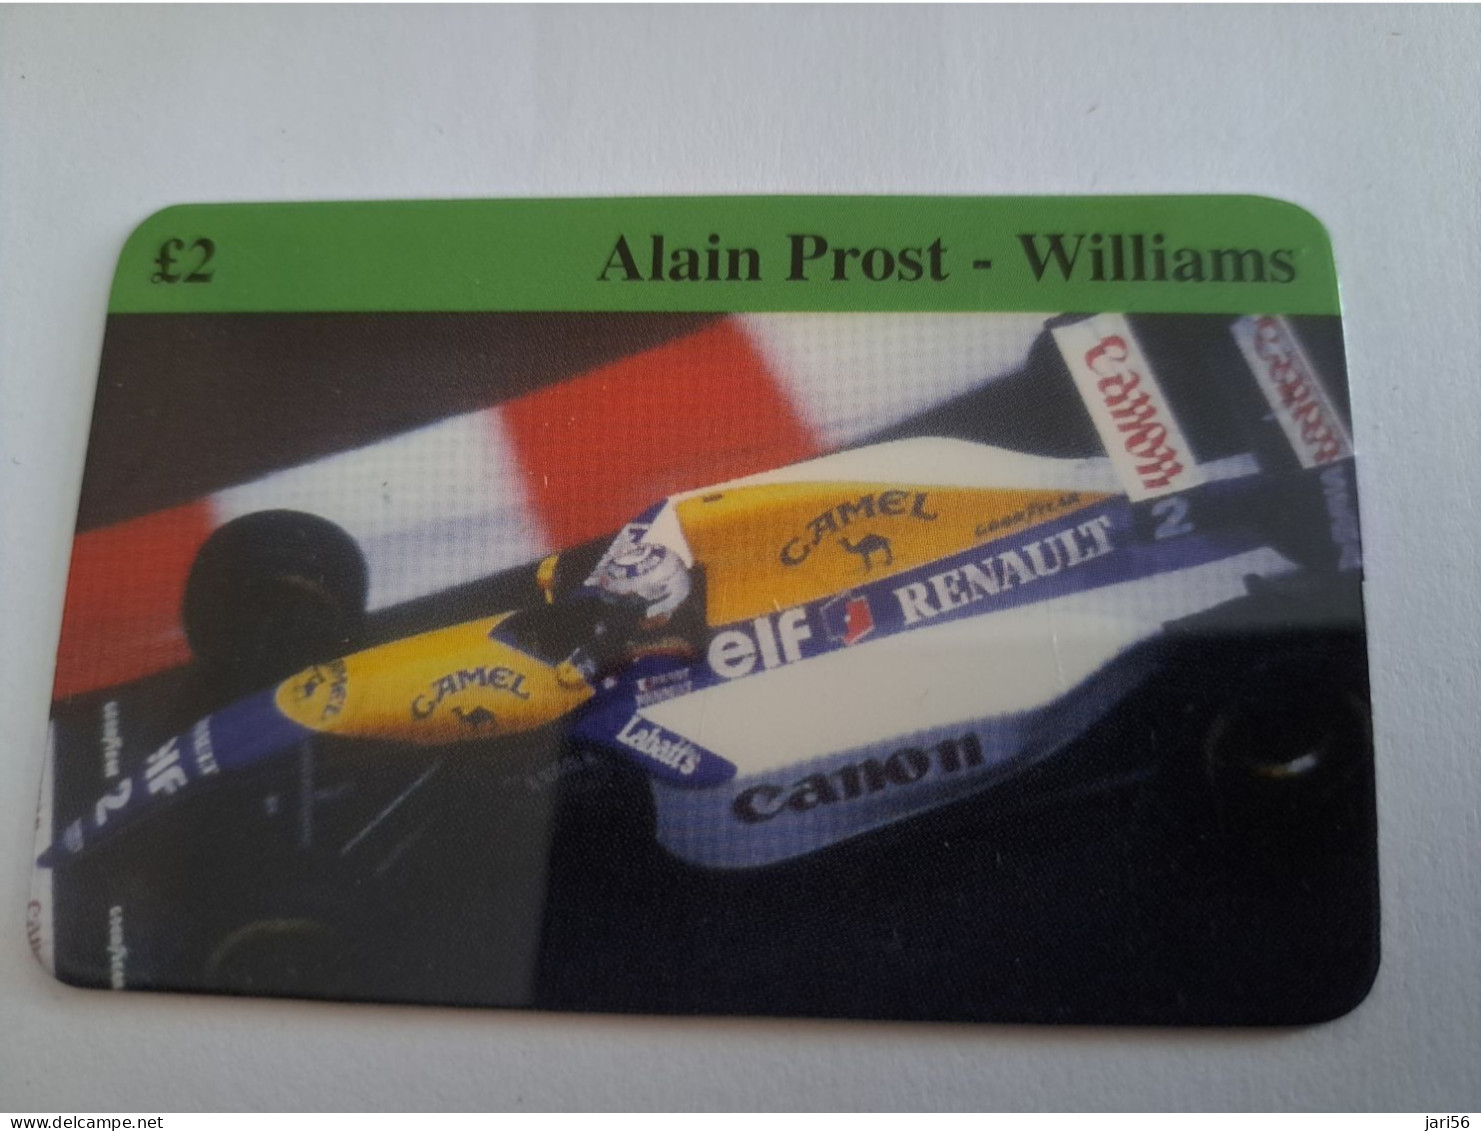 GREAT BRITAIN / 2 POUND  / RACE CAR/  ALAN PROST - WILLIAMS    /    PREPAID CARD/ USED   **15715** - [10] Colecciones